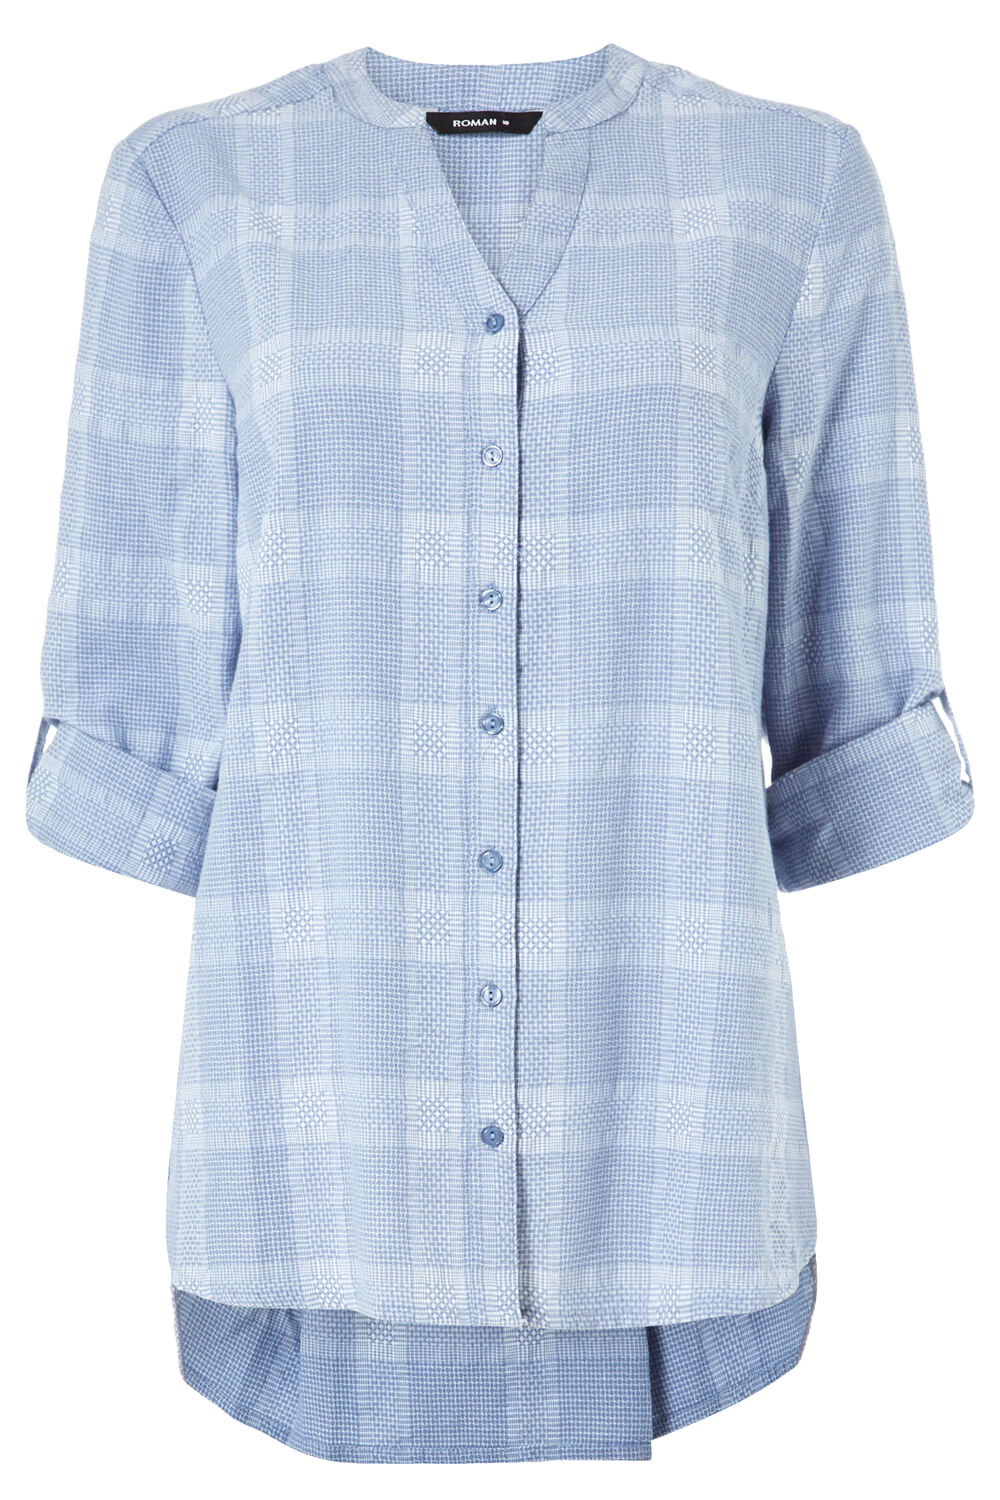 Blue Textured Check Print Wrap Back Shirt, Image 5 of 5